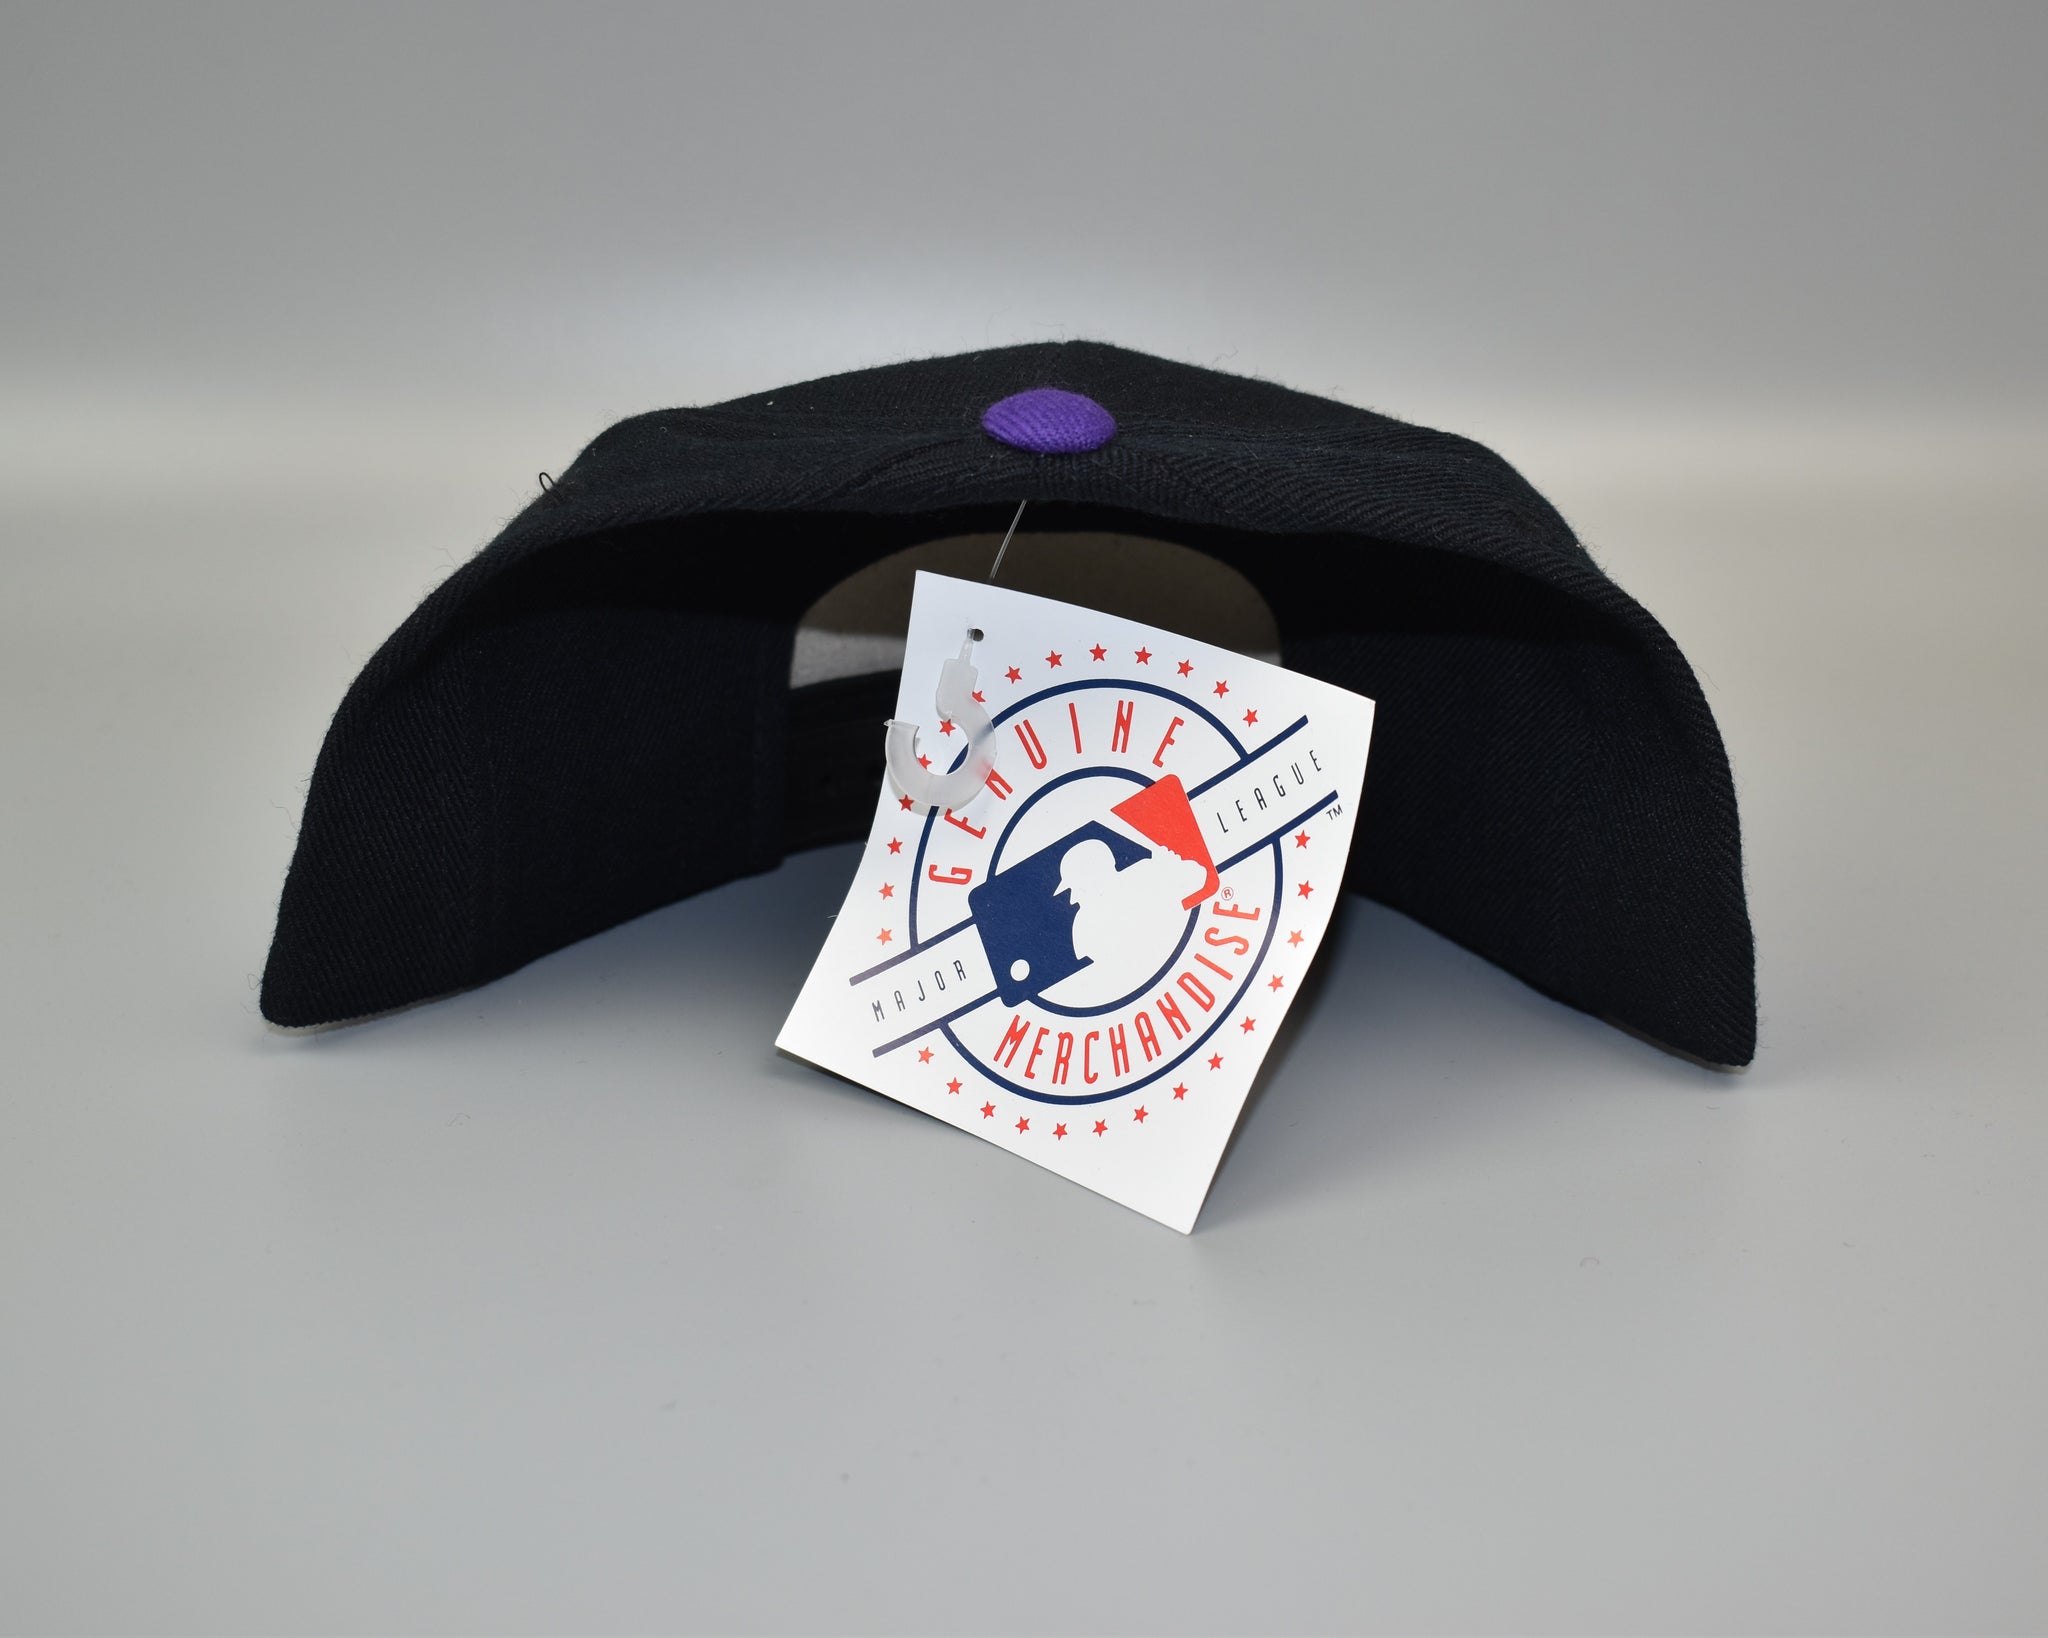 Tampa Bay Devil Rays Logo Athletic Vintage Wool Snapback Cap Hat - NWT